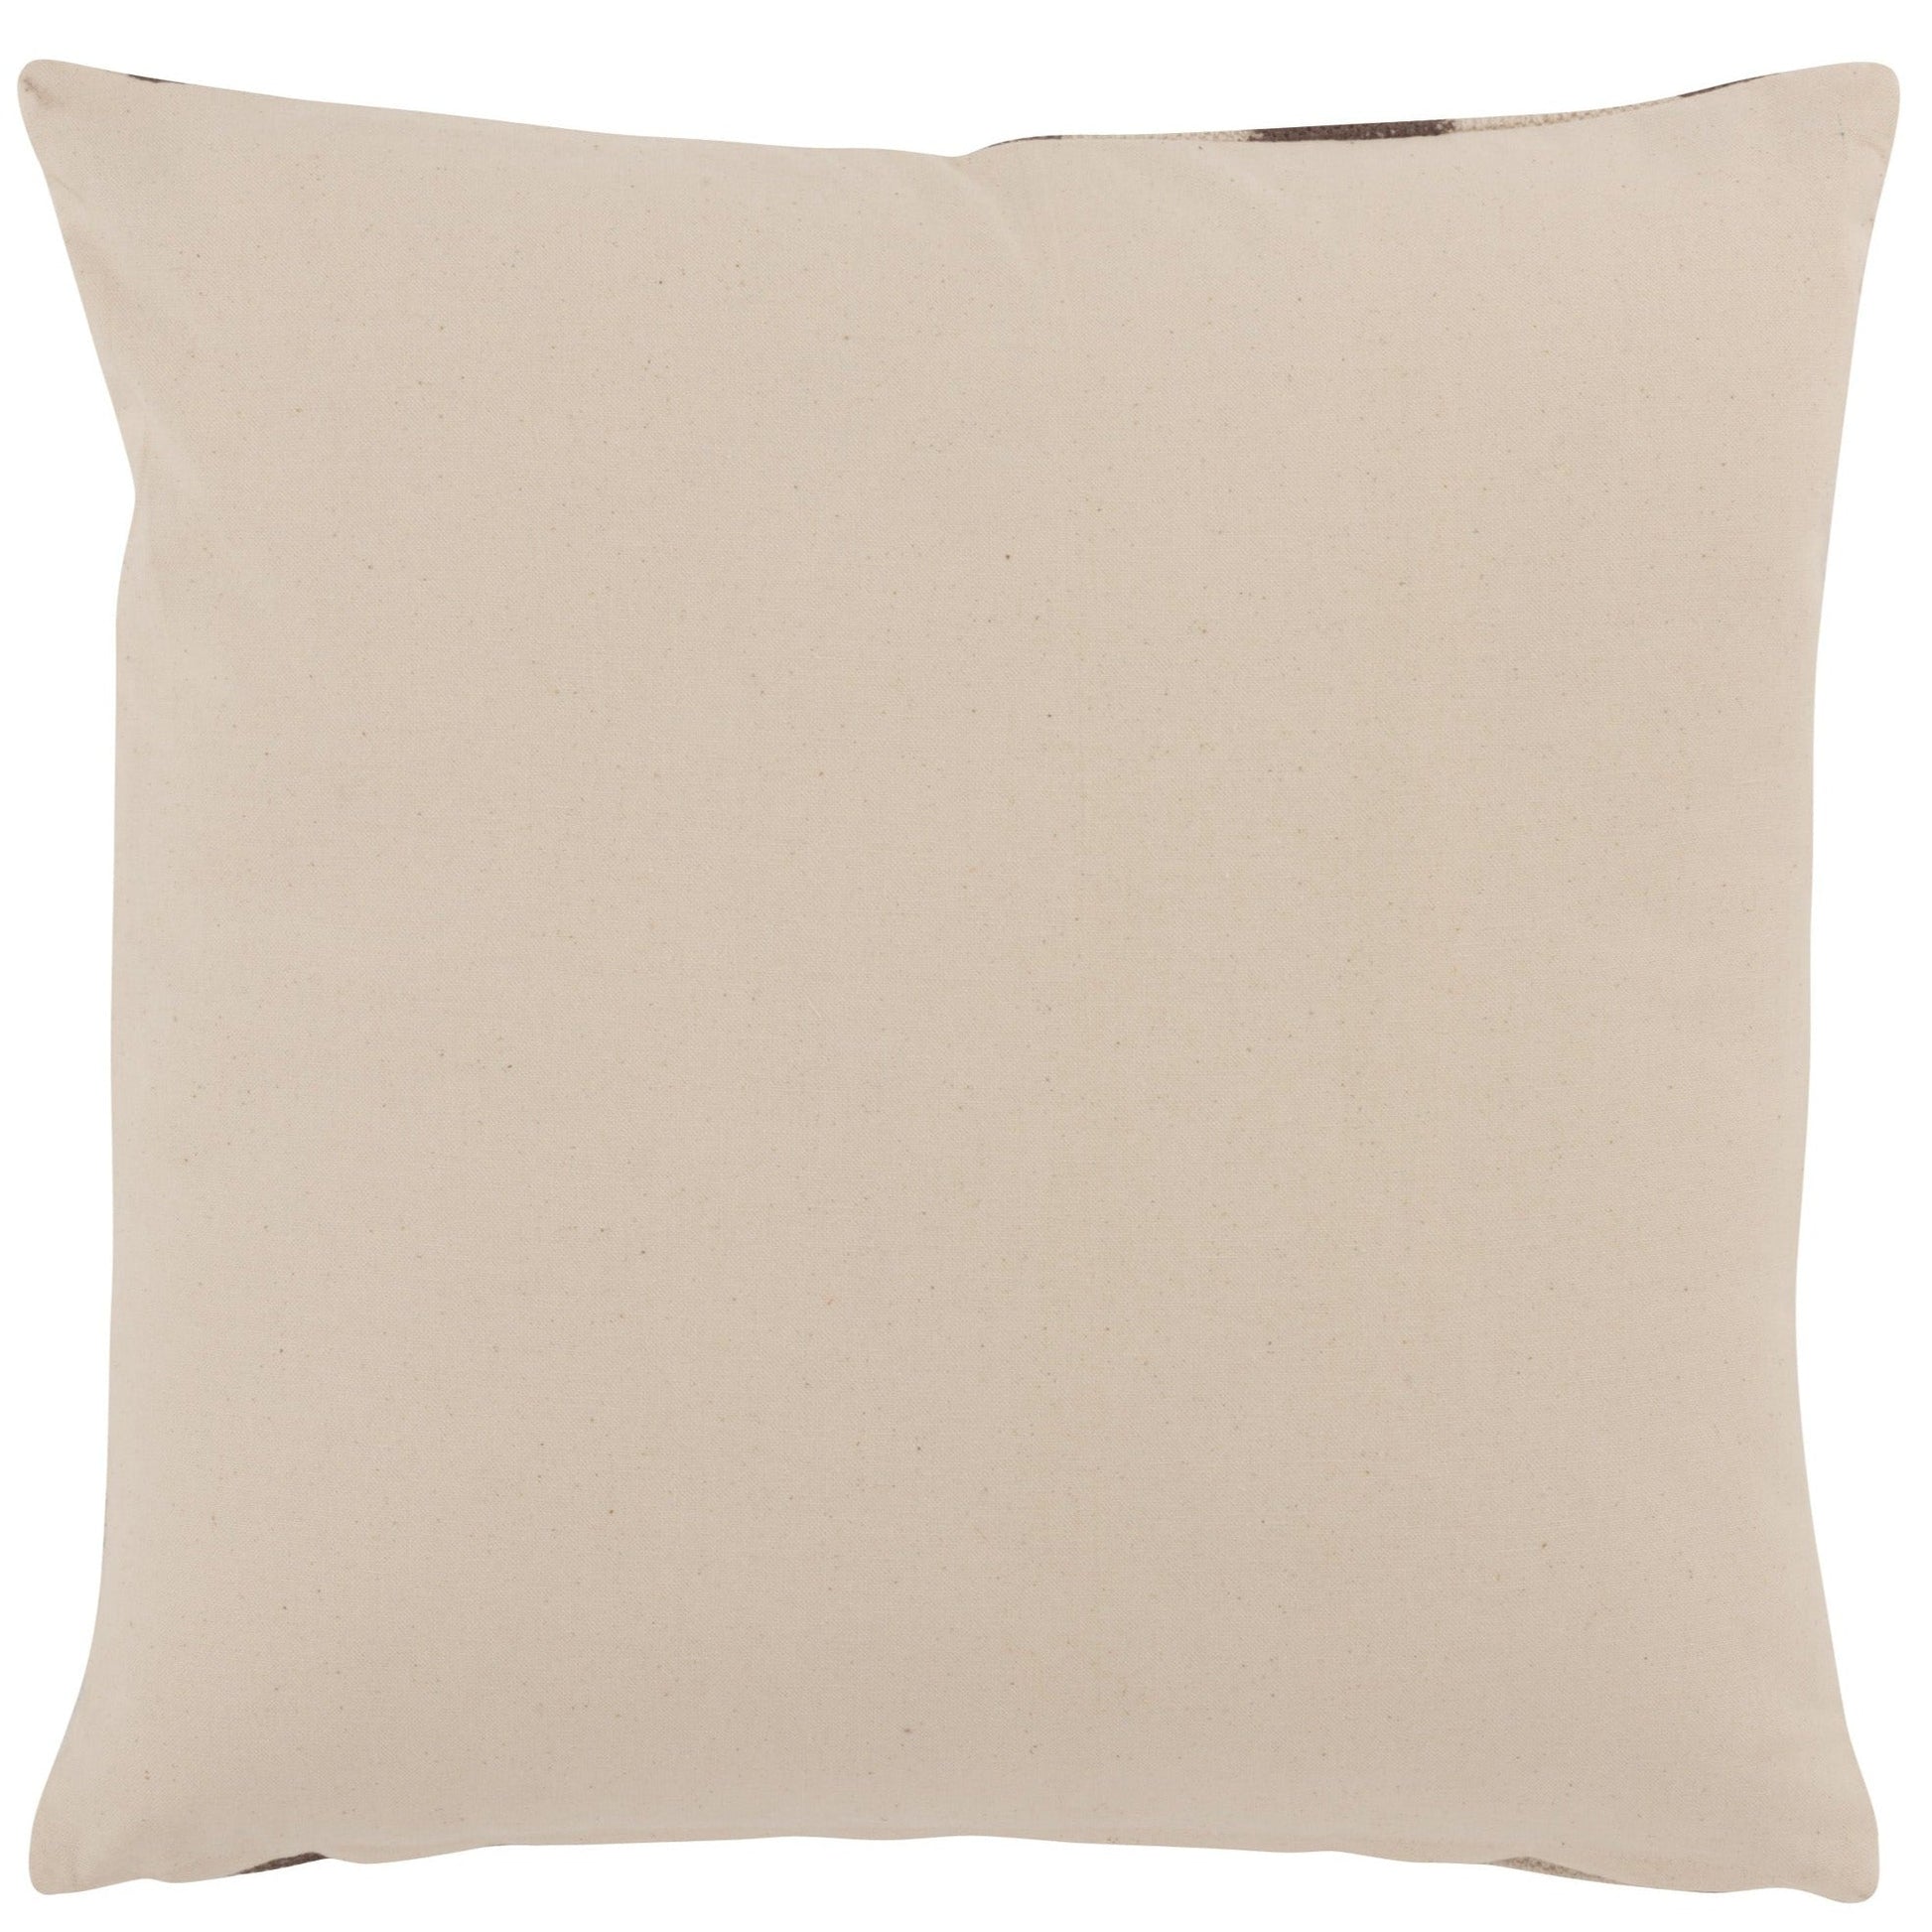 Square Cotton Cushion